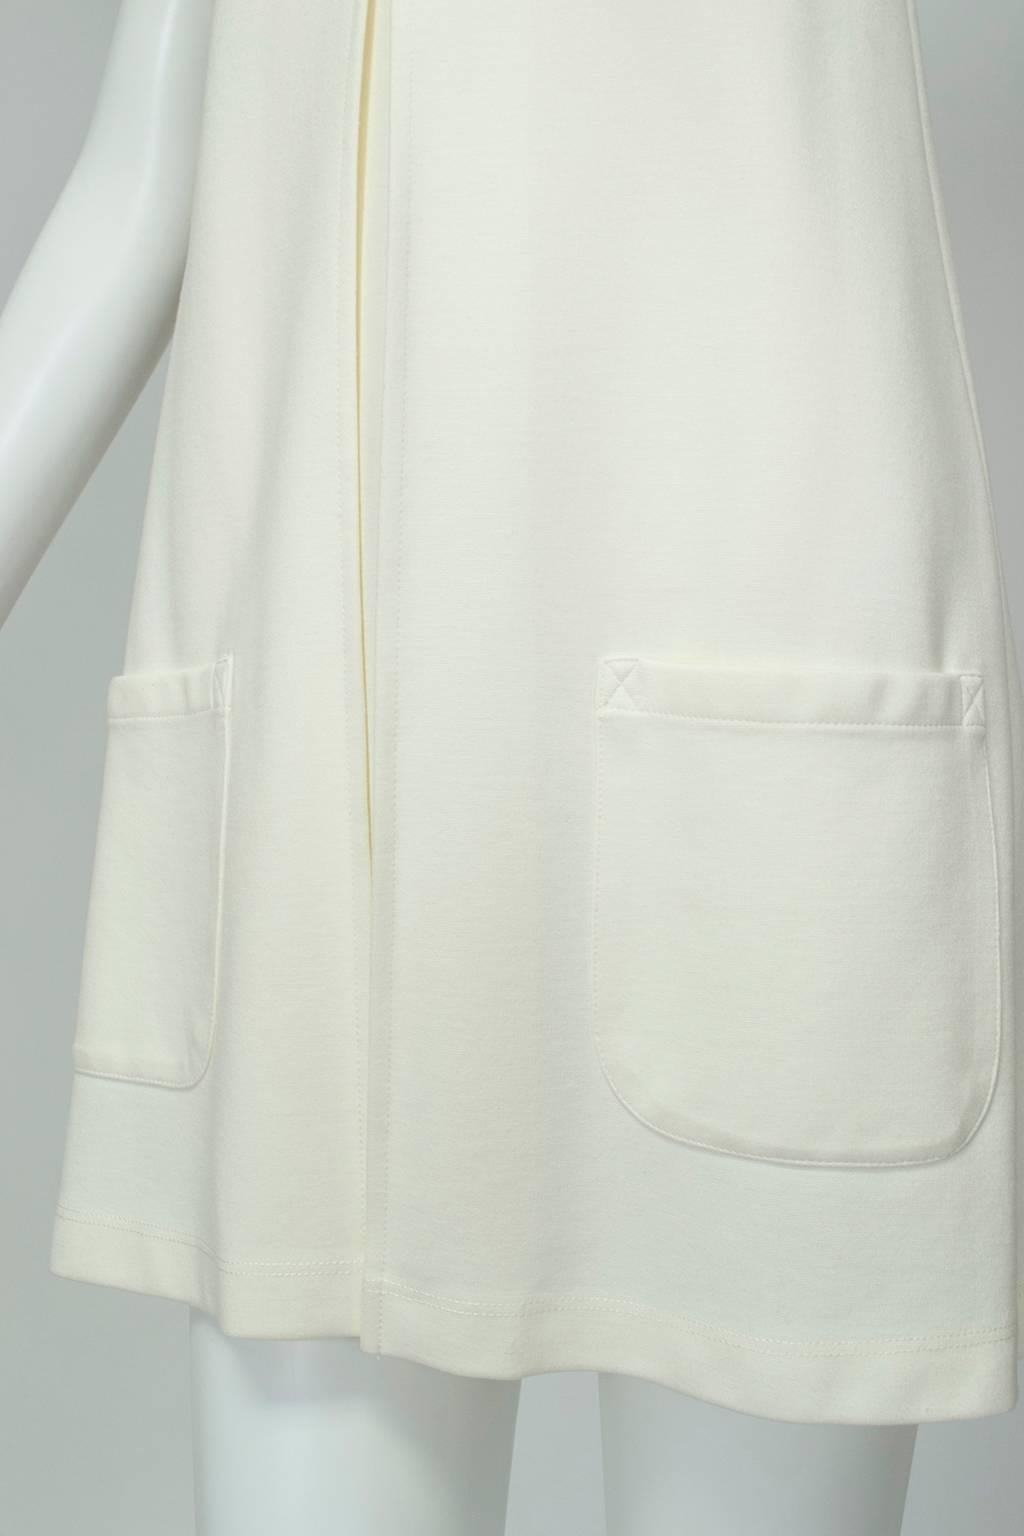 White von Furstenberg Empire Pinafore Tunic Micro Mini Dress - XS, 21st Century 1